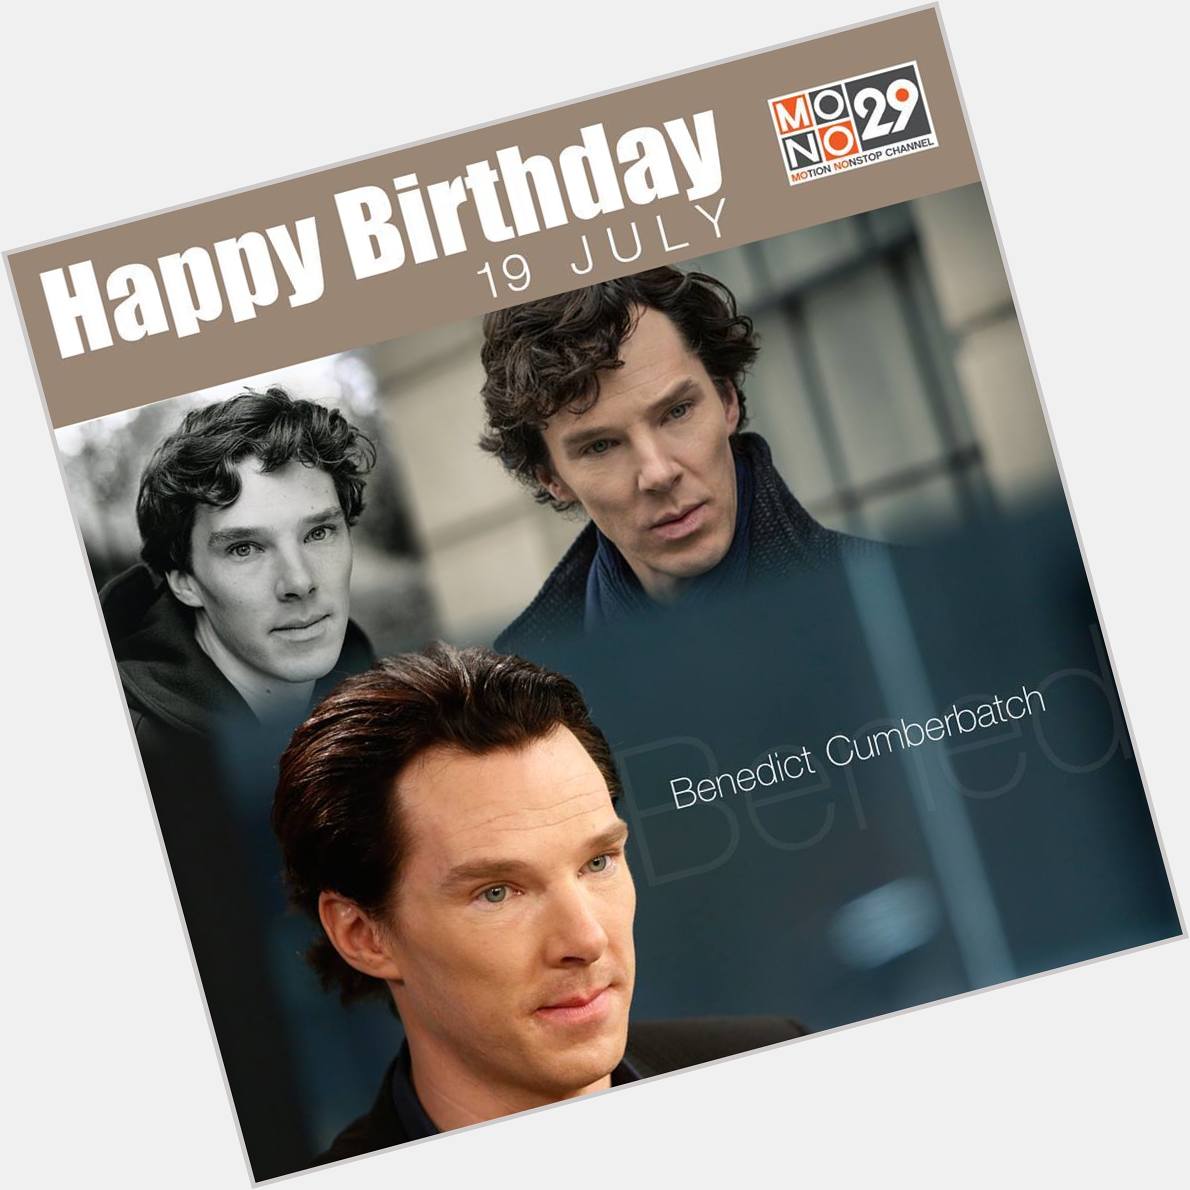 19 July Happy Birthday 
Benedict Cumberbatch
(Sherlock,Star Trek Into Darkness,The Imitation Game) 